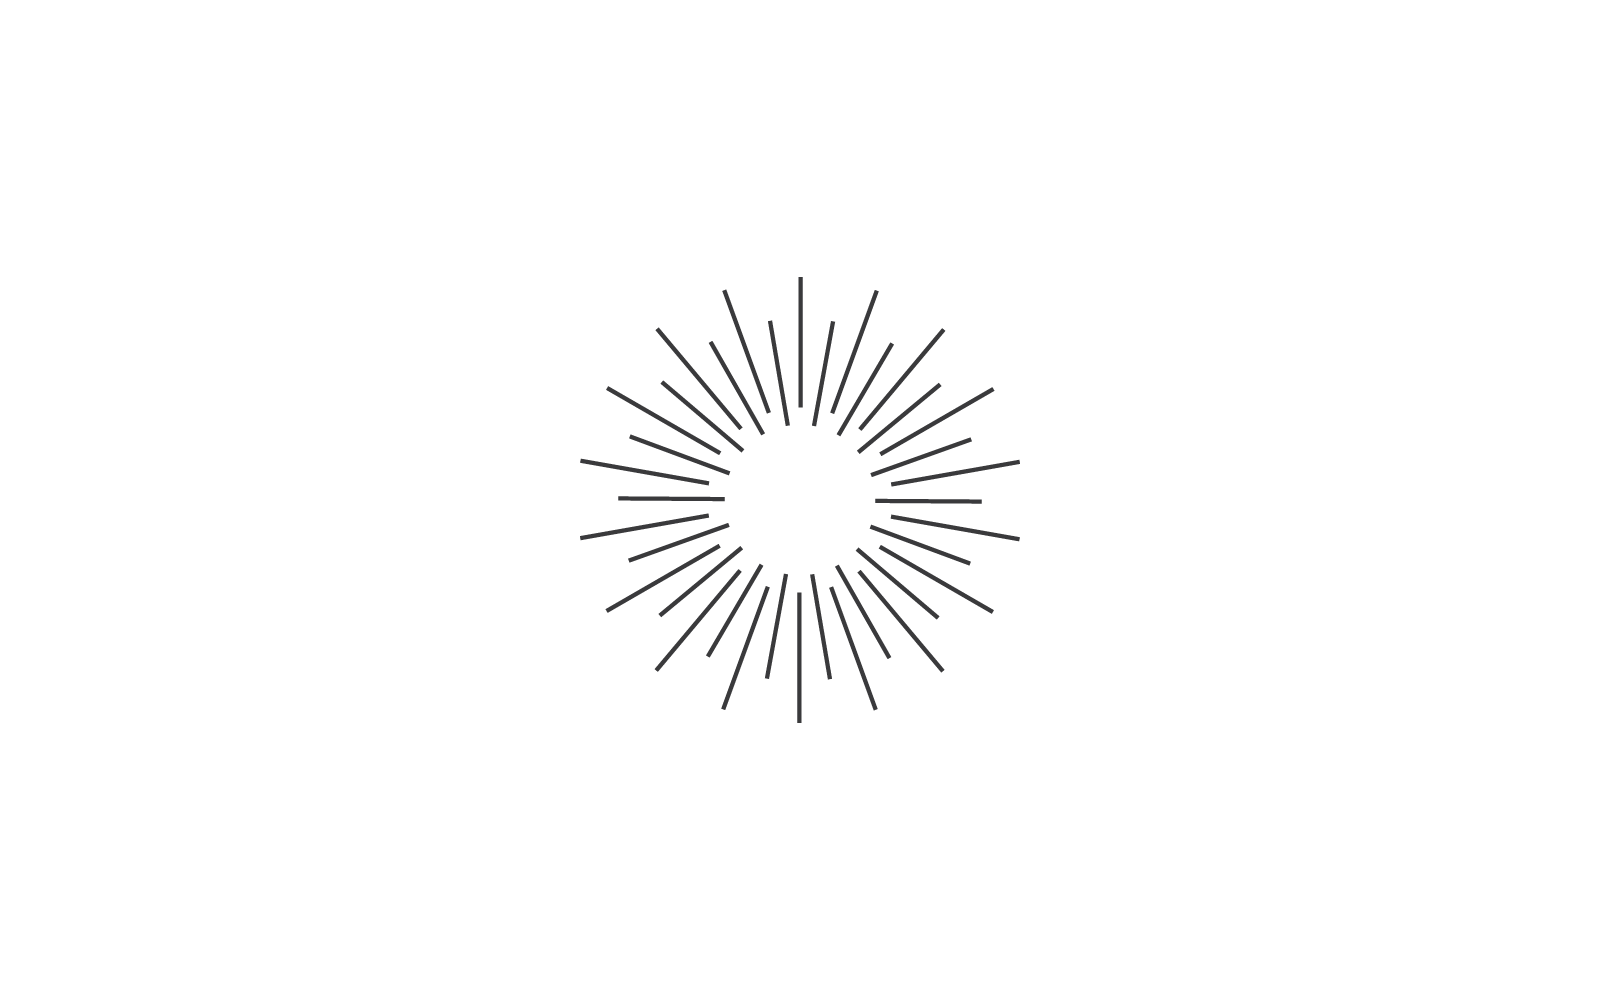 Sunburst ilustracja Płaska konstrukcja ikona szablonu